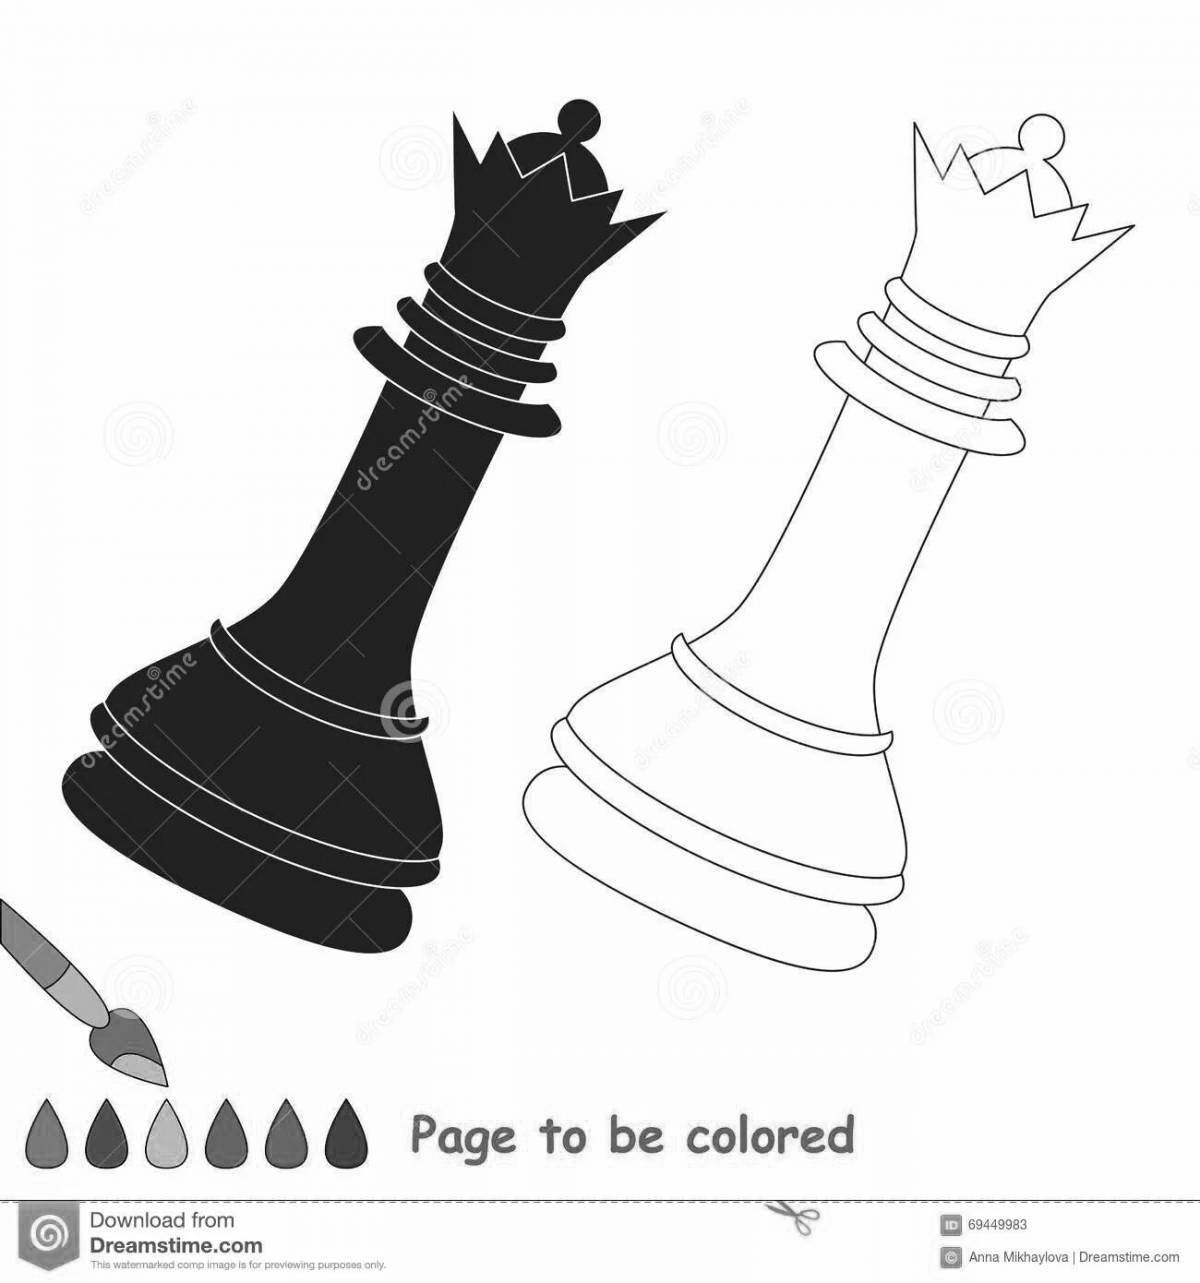 Раскраска благородная шахматная королева